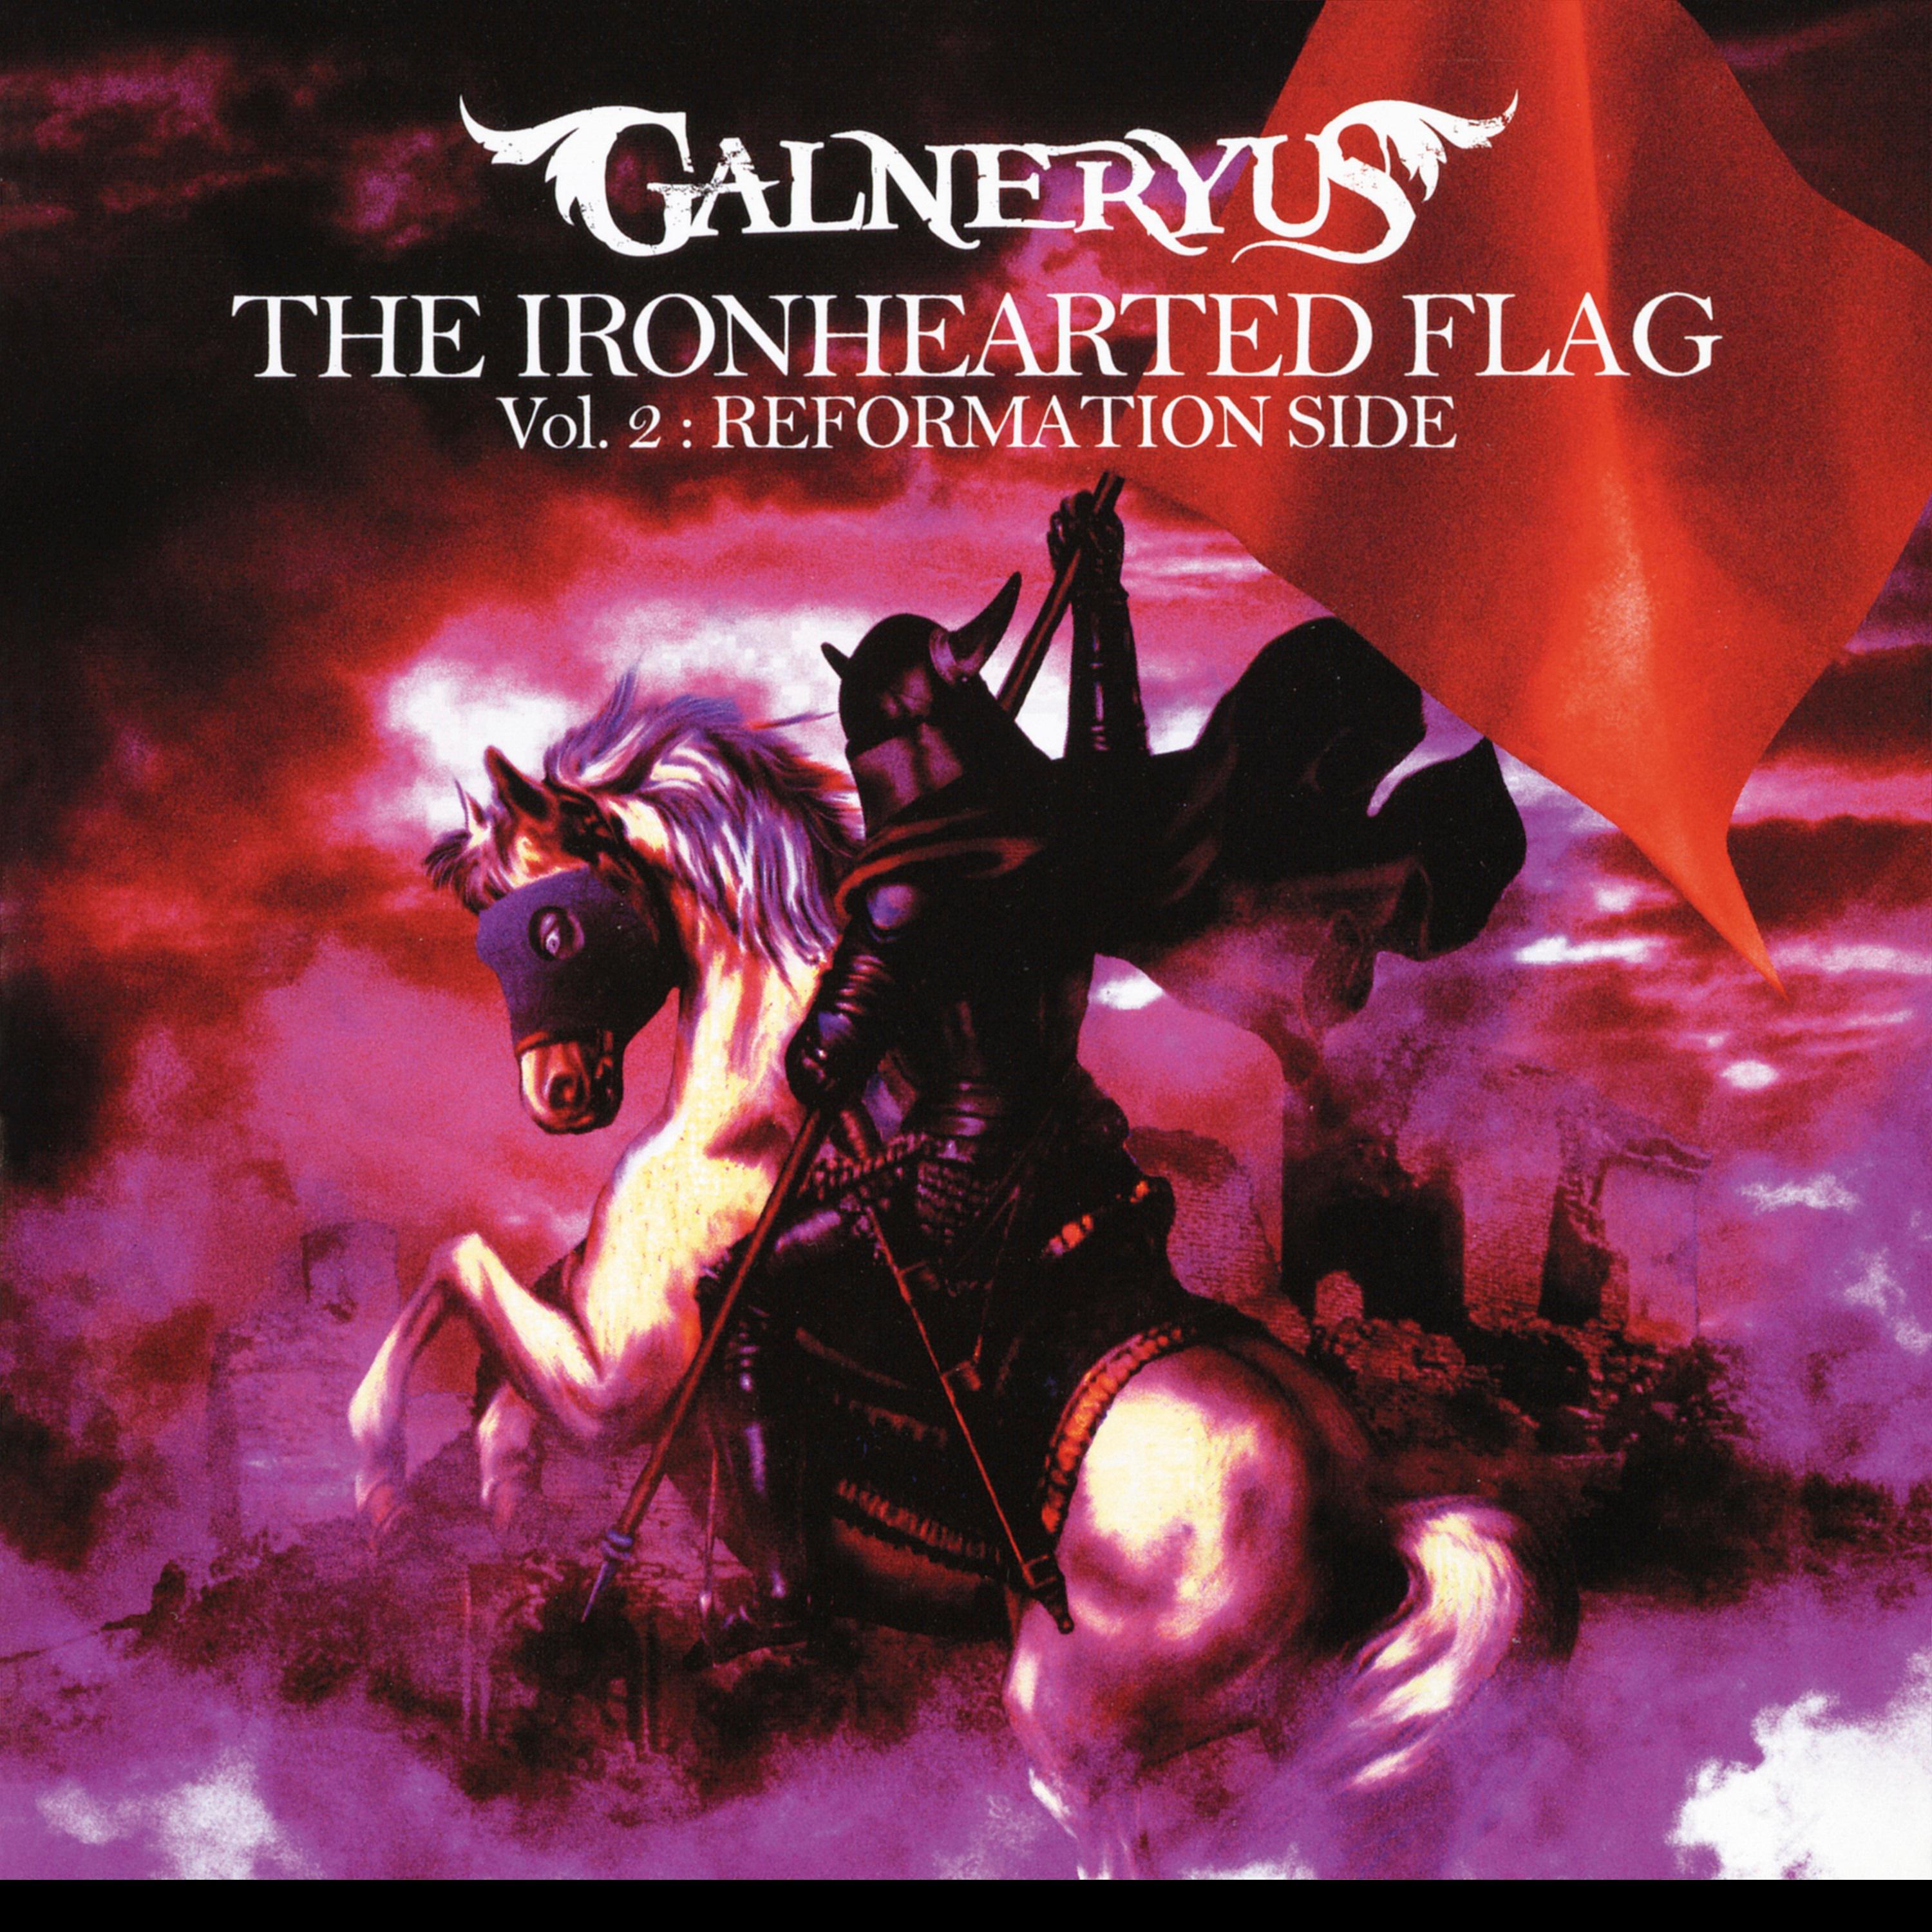 Galneryus - Wings of Misery (Holding the Broken Wings)